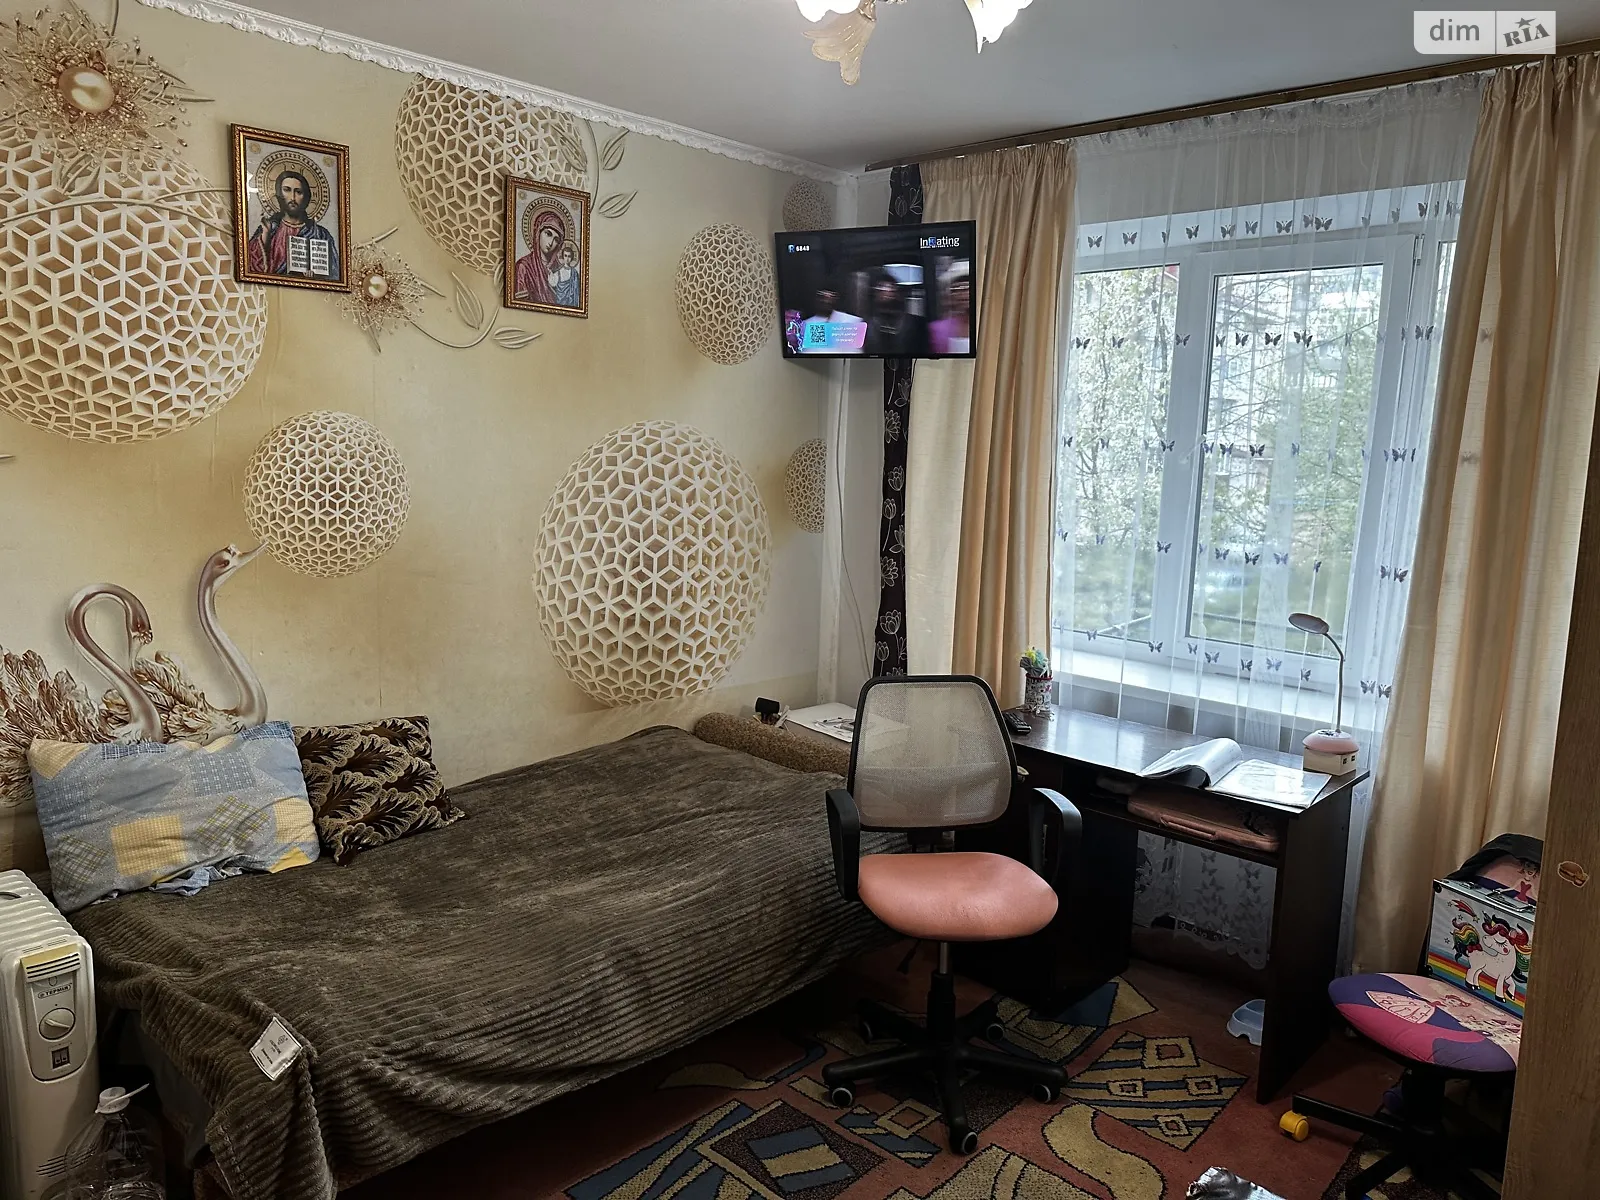 Продается комната 15 кв. м в Виннице, цена: 14500 $ - фото 1